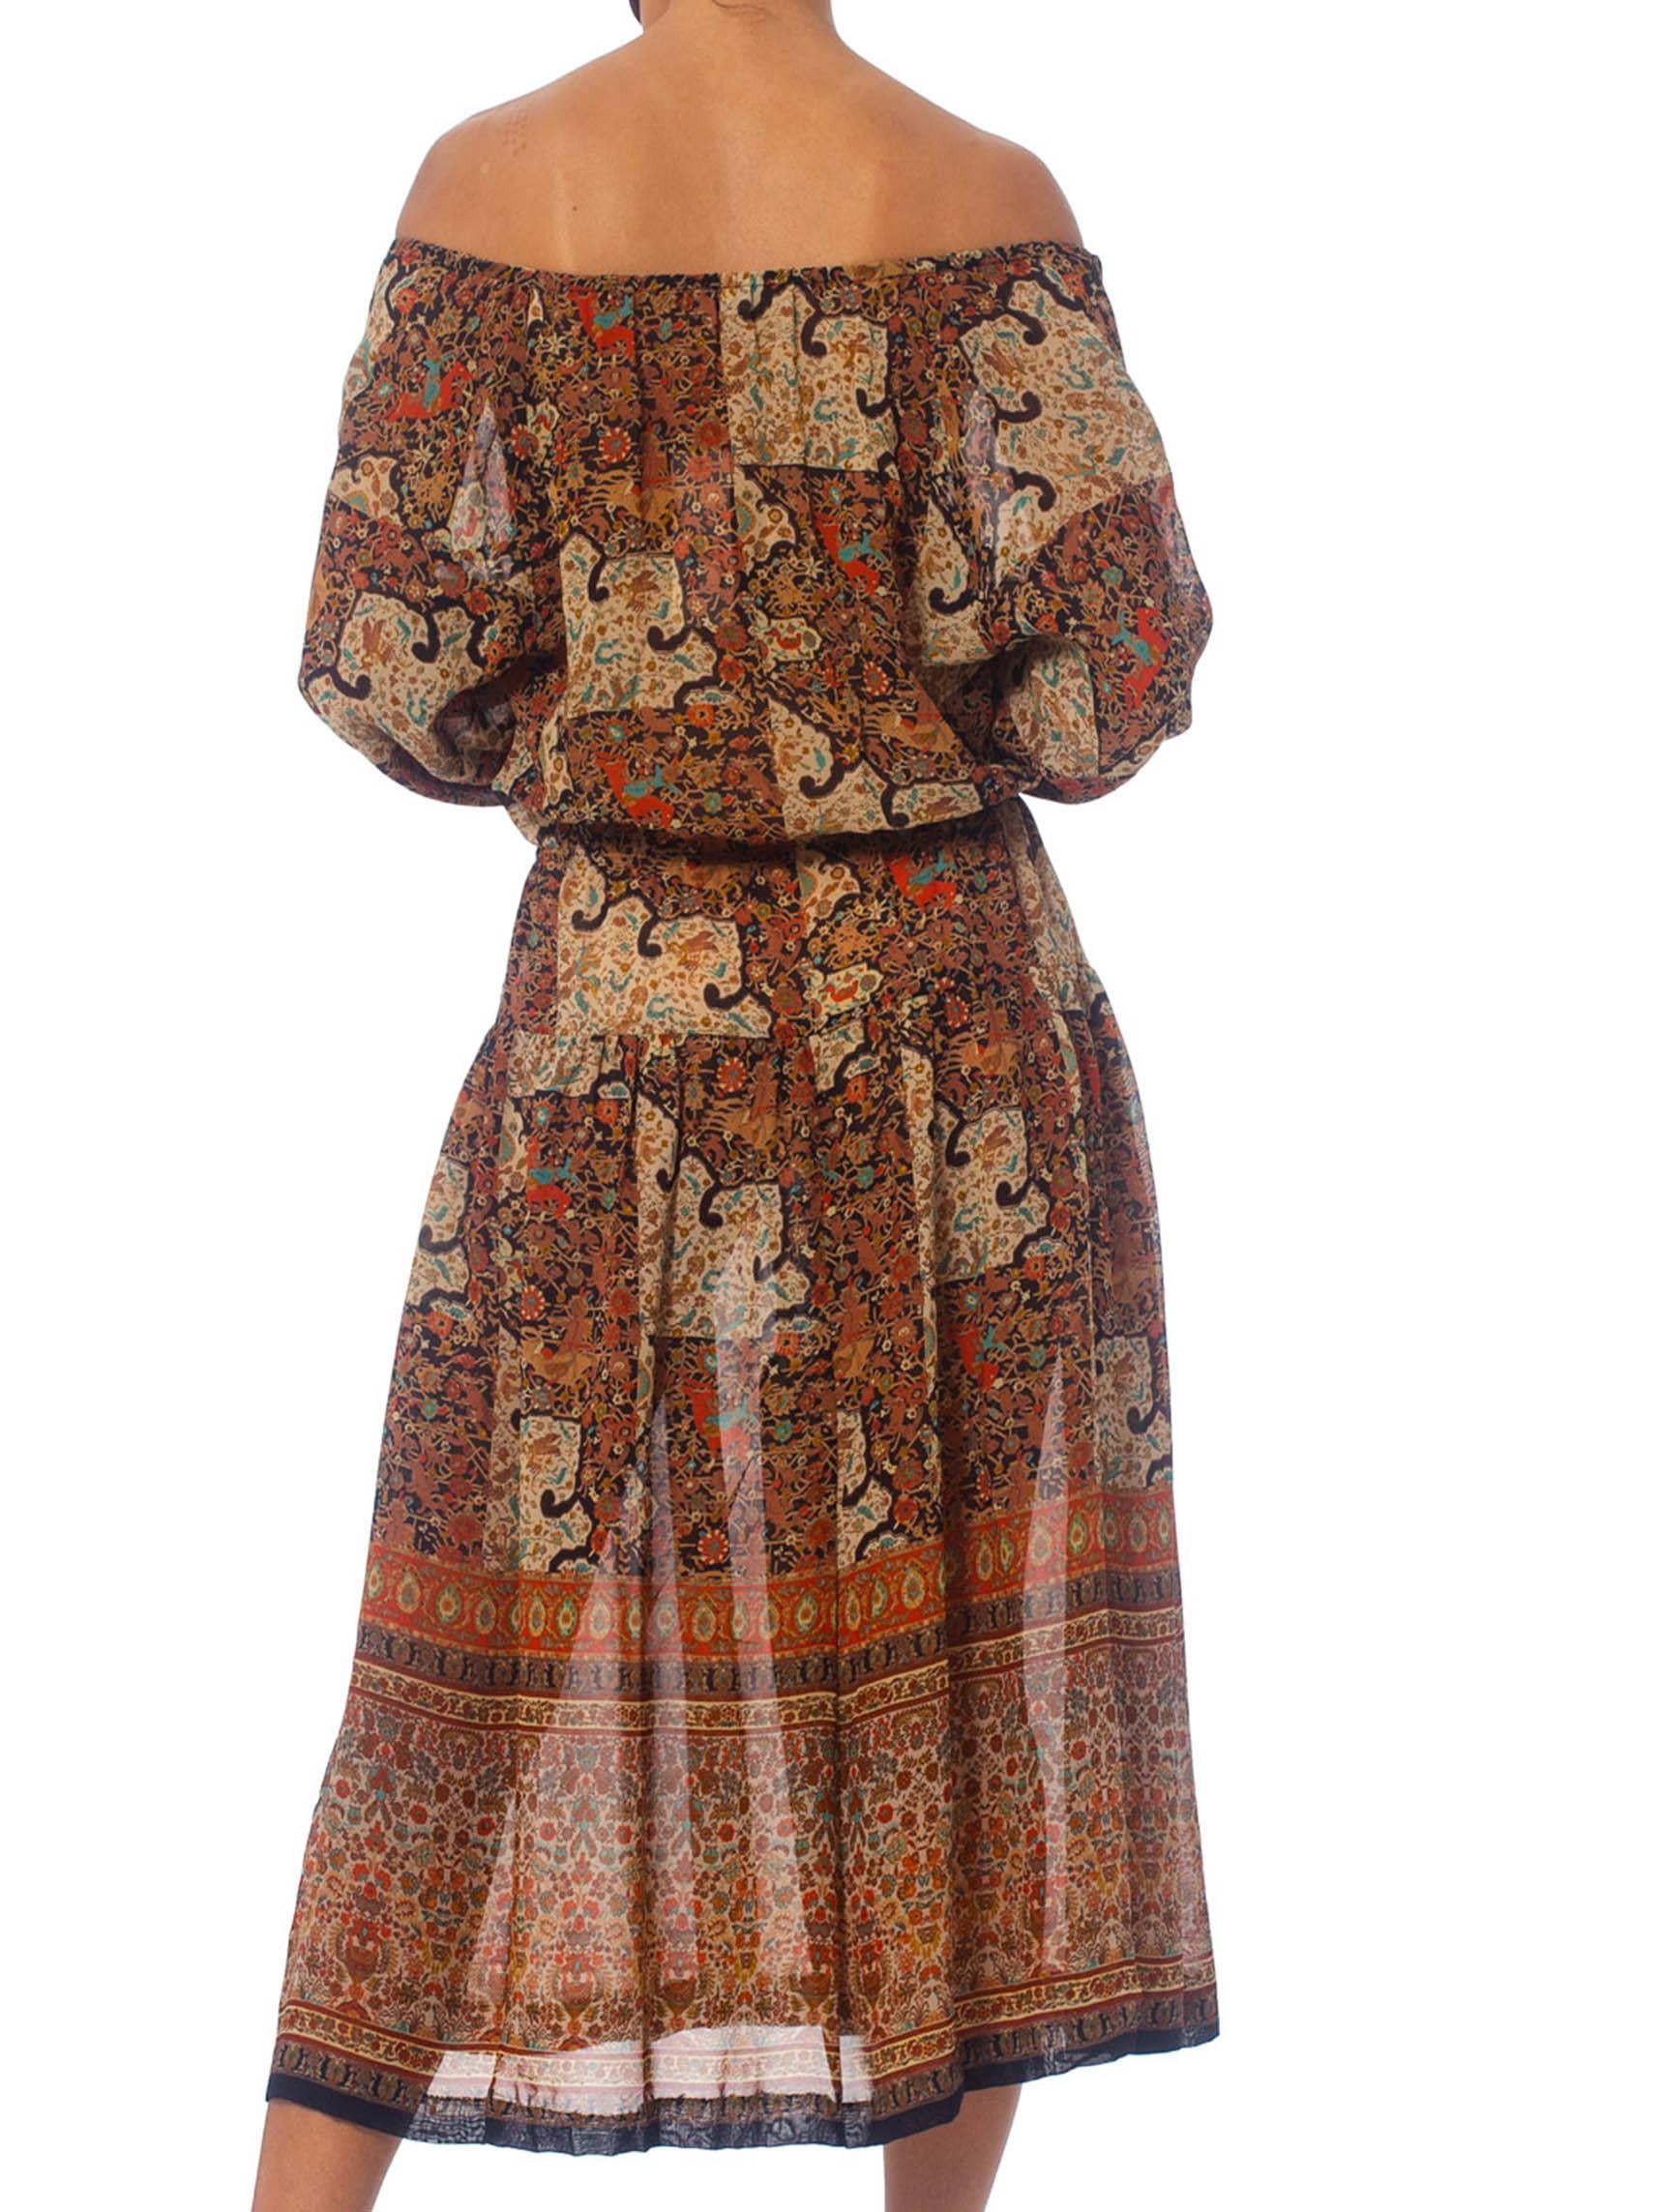 Women's 1970S Rayon French Exotic Persian Printed Boho Dress